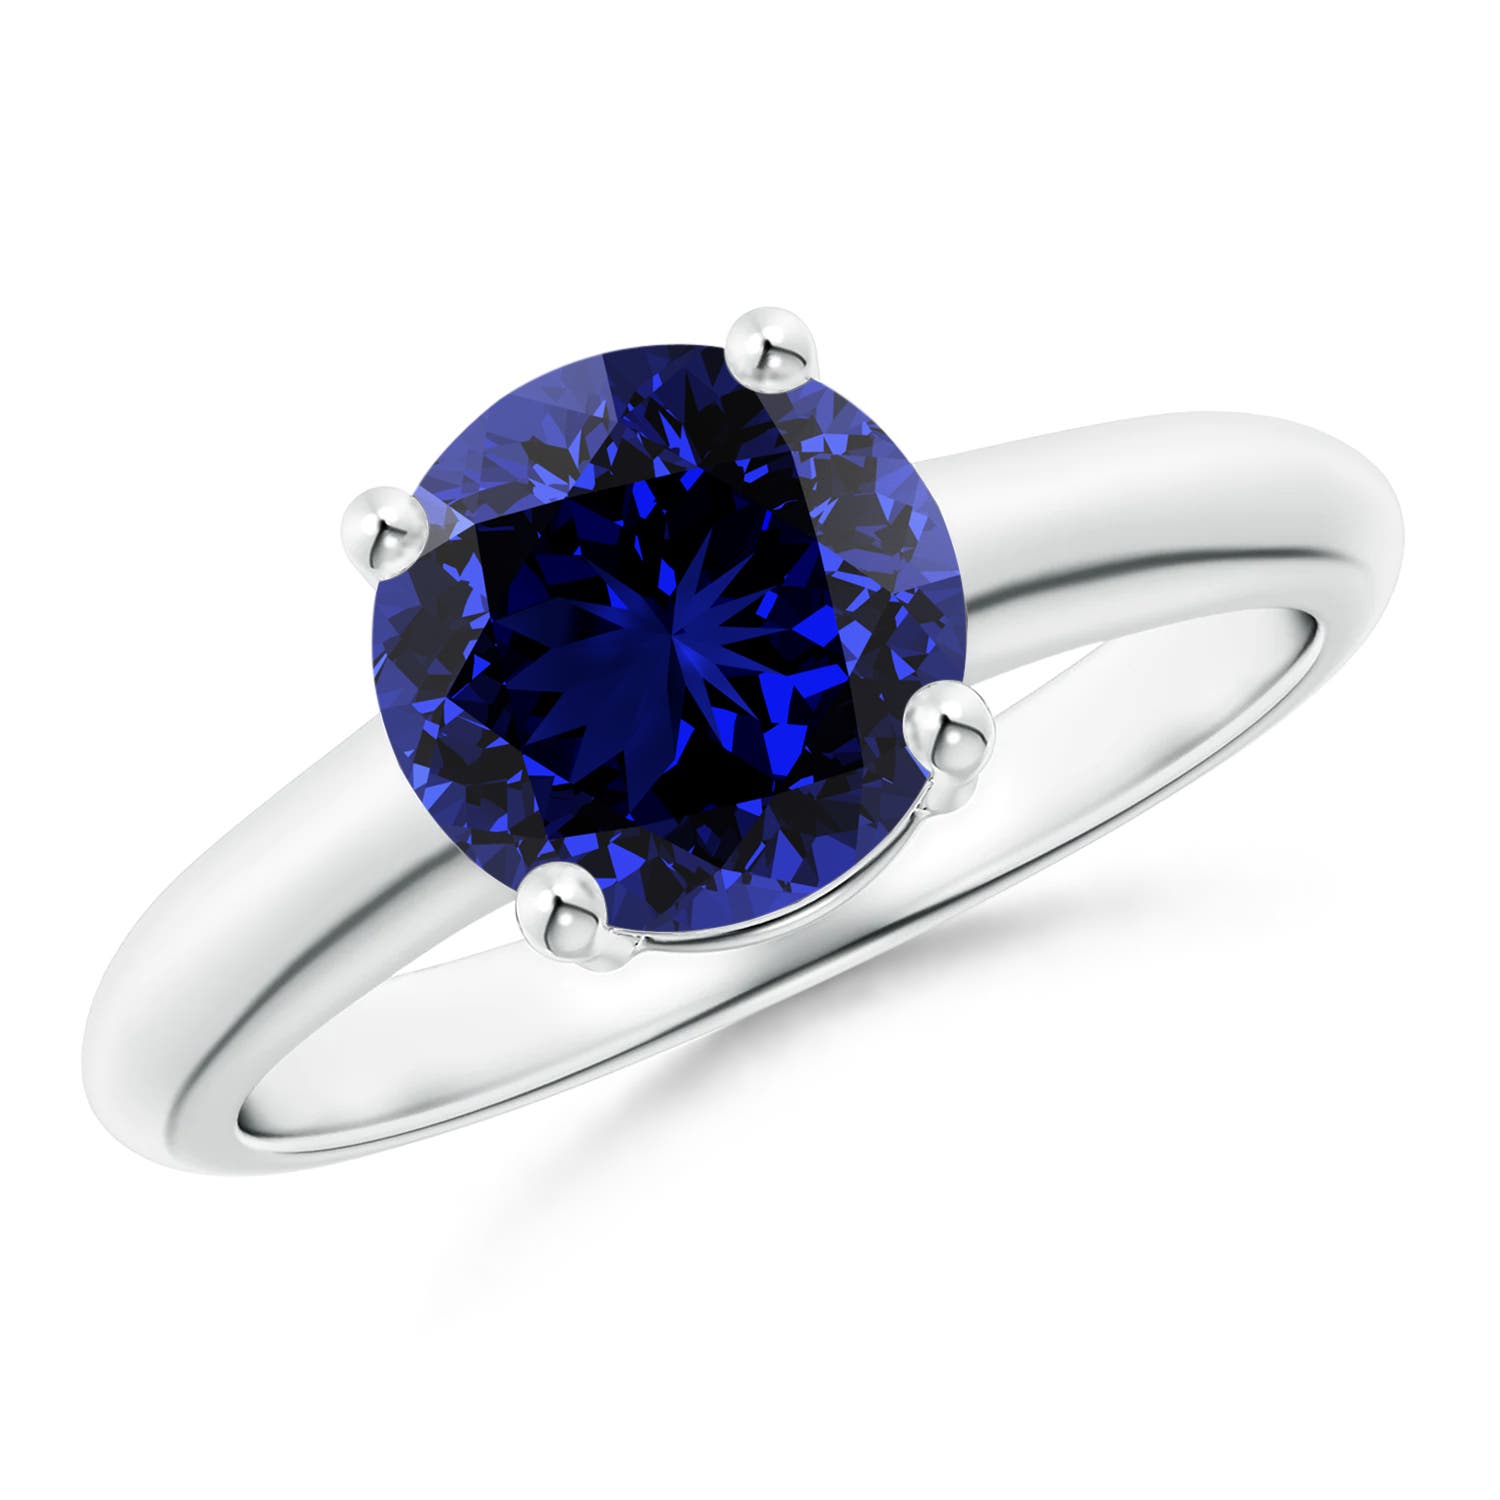 Natural Blue Sapphire Ring 2.16 carats set in 18K White Gold with Diamonds  / Jupitergem